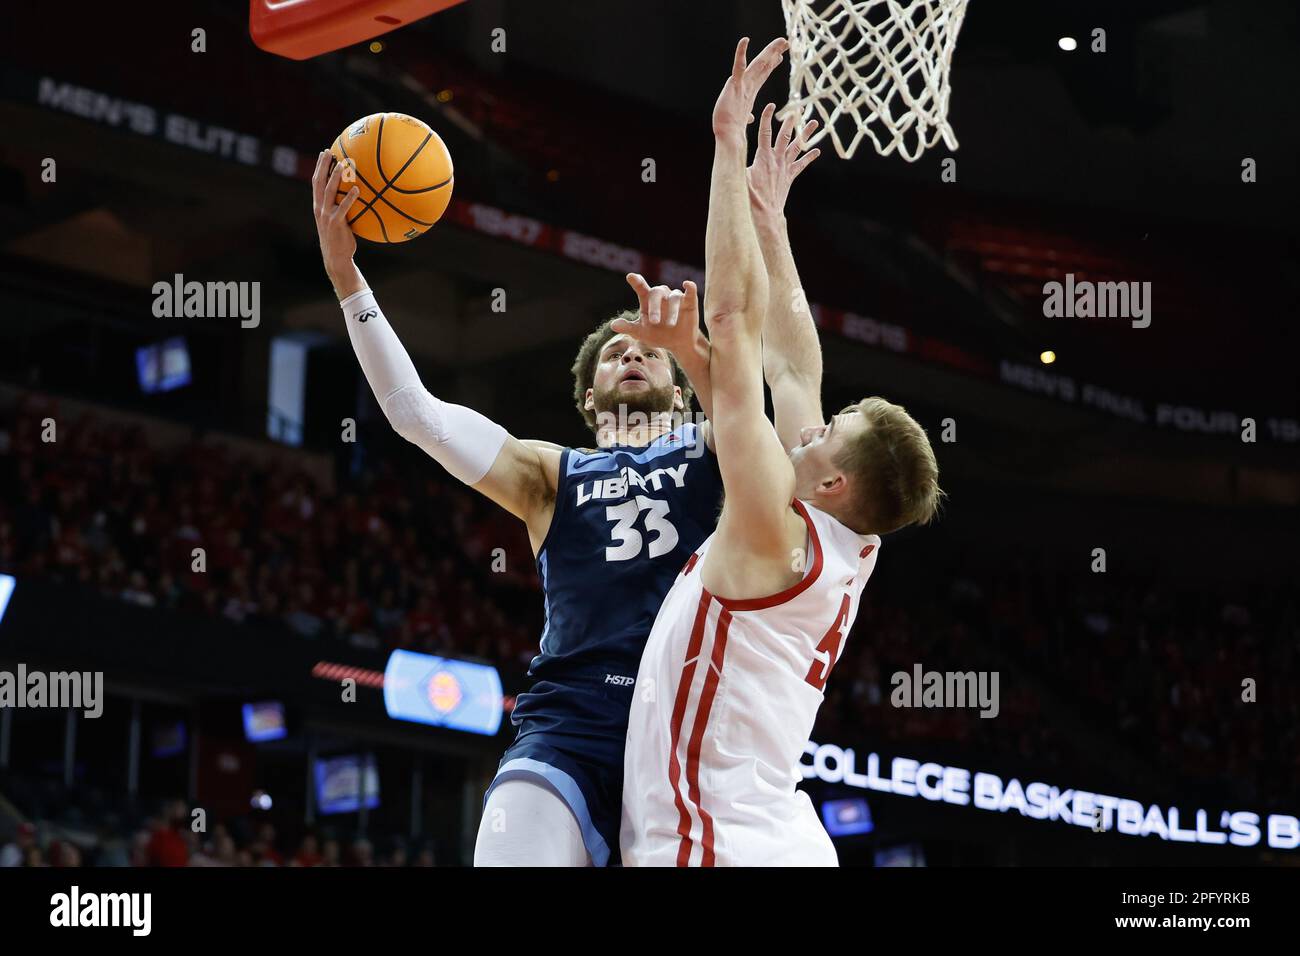 David robinson basketball hi-res stock photography and images - Alamy